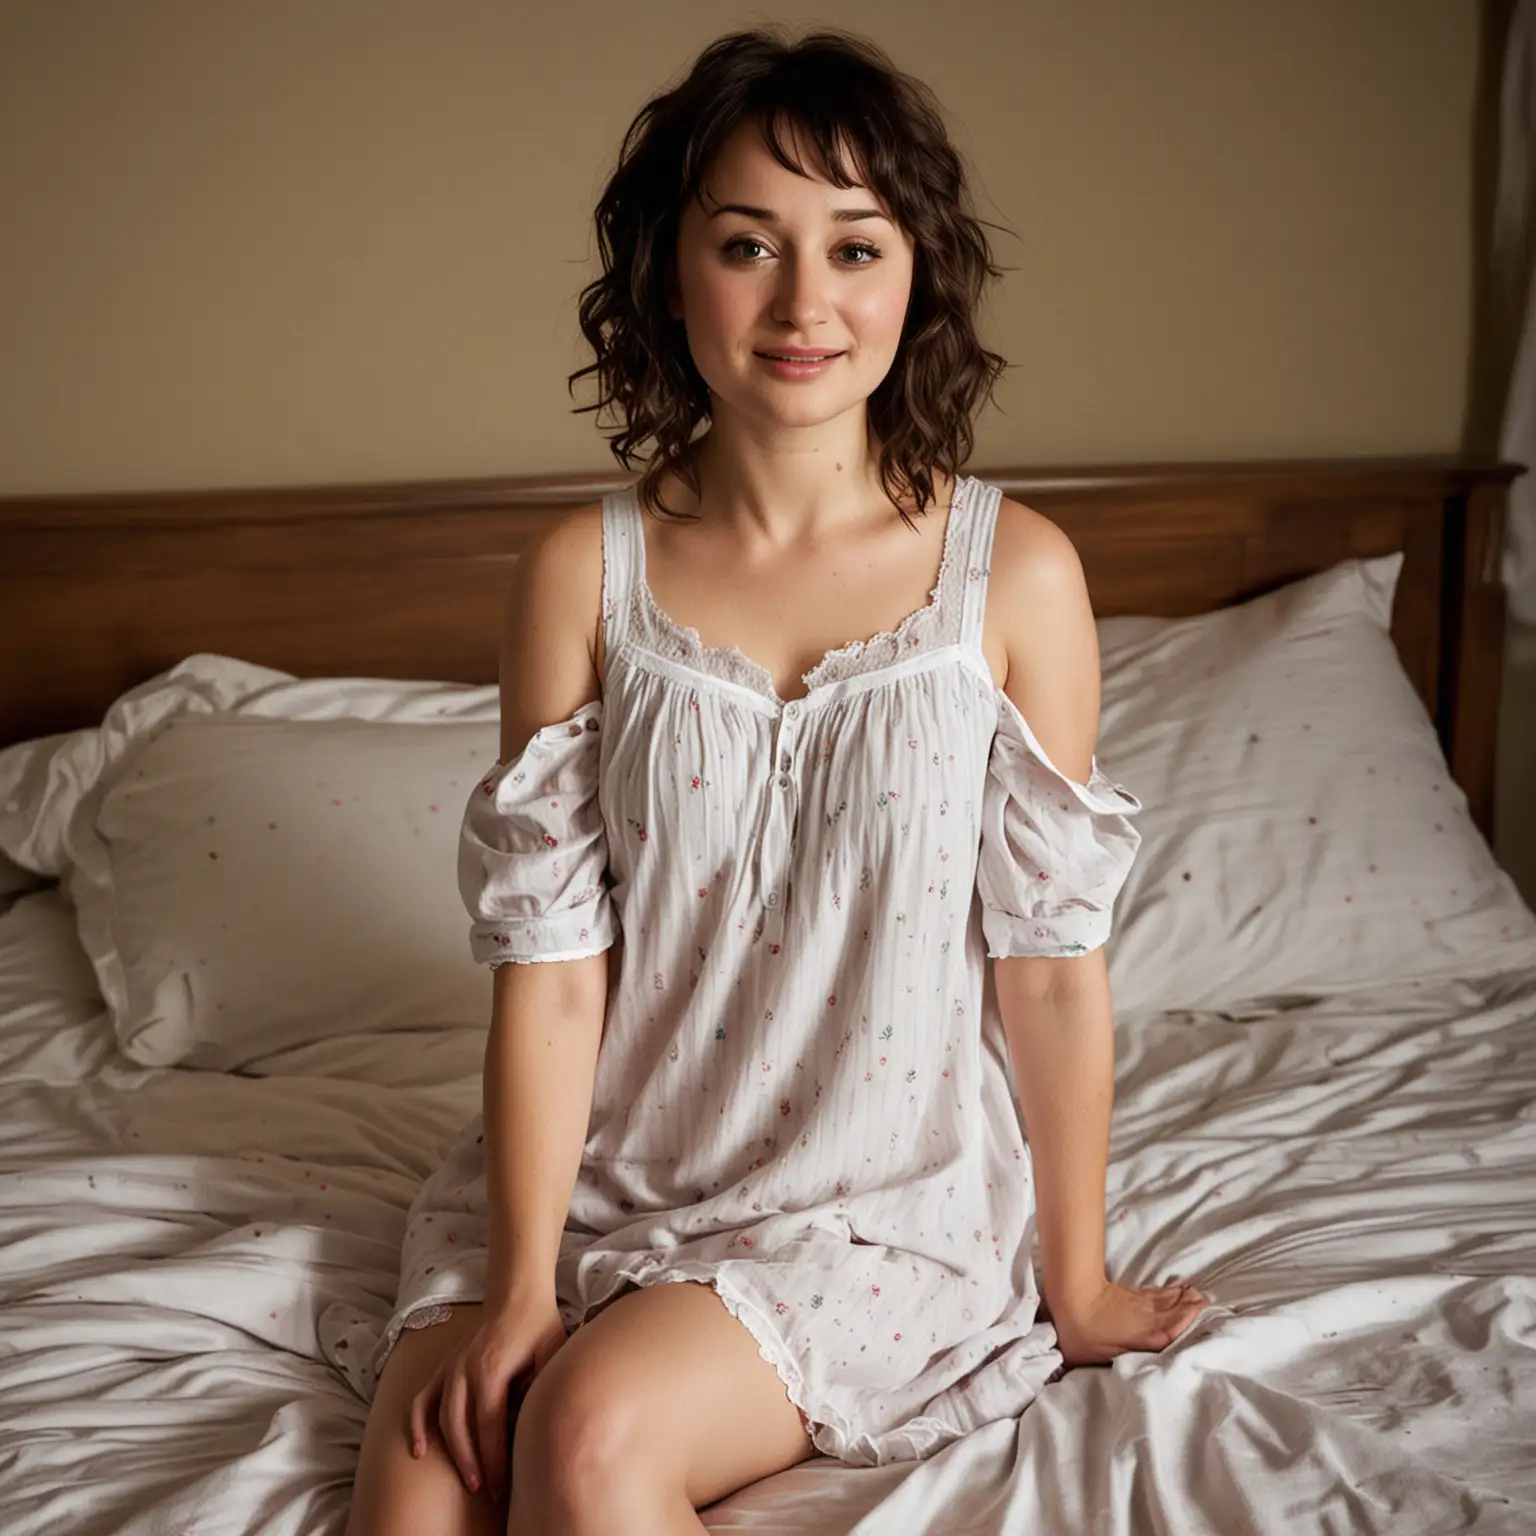 Actress Milana Vayntrub in Nightie on Small Bed with Light Injury